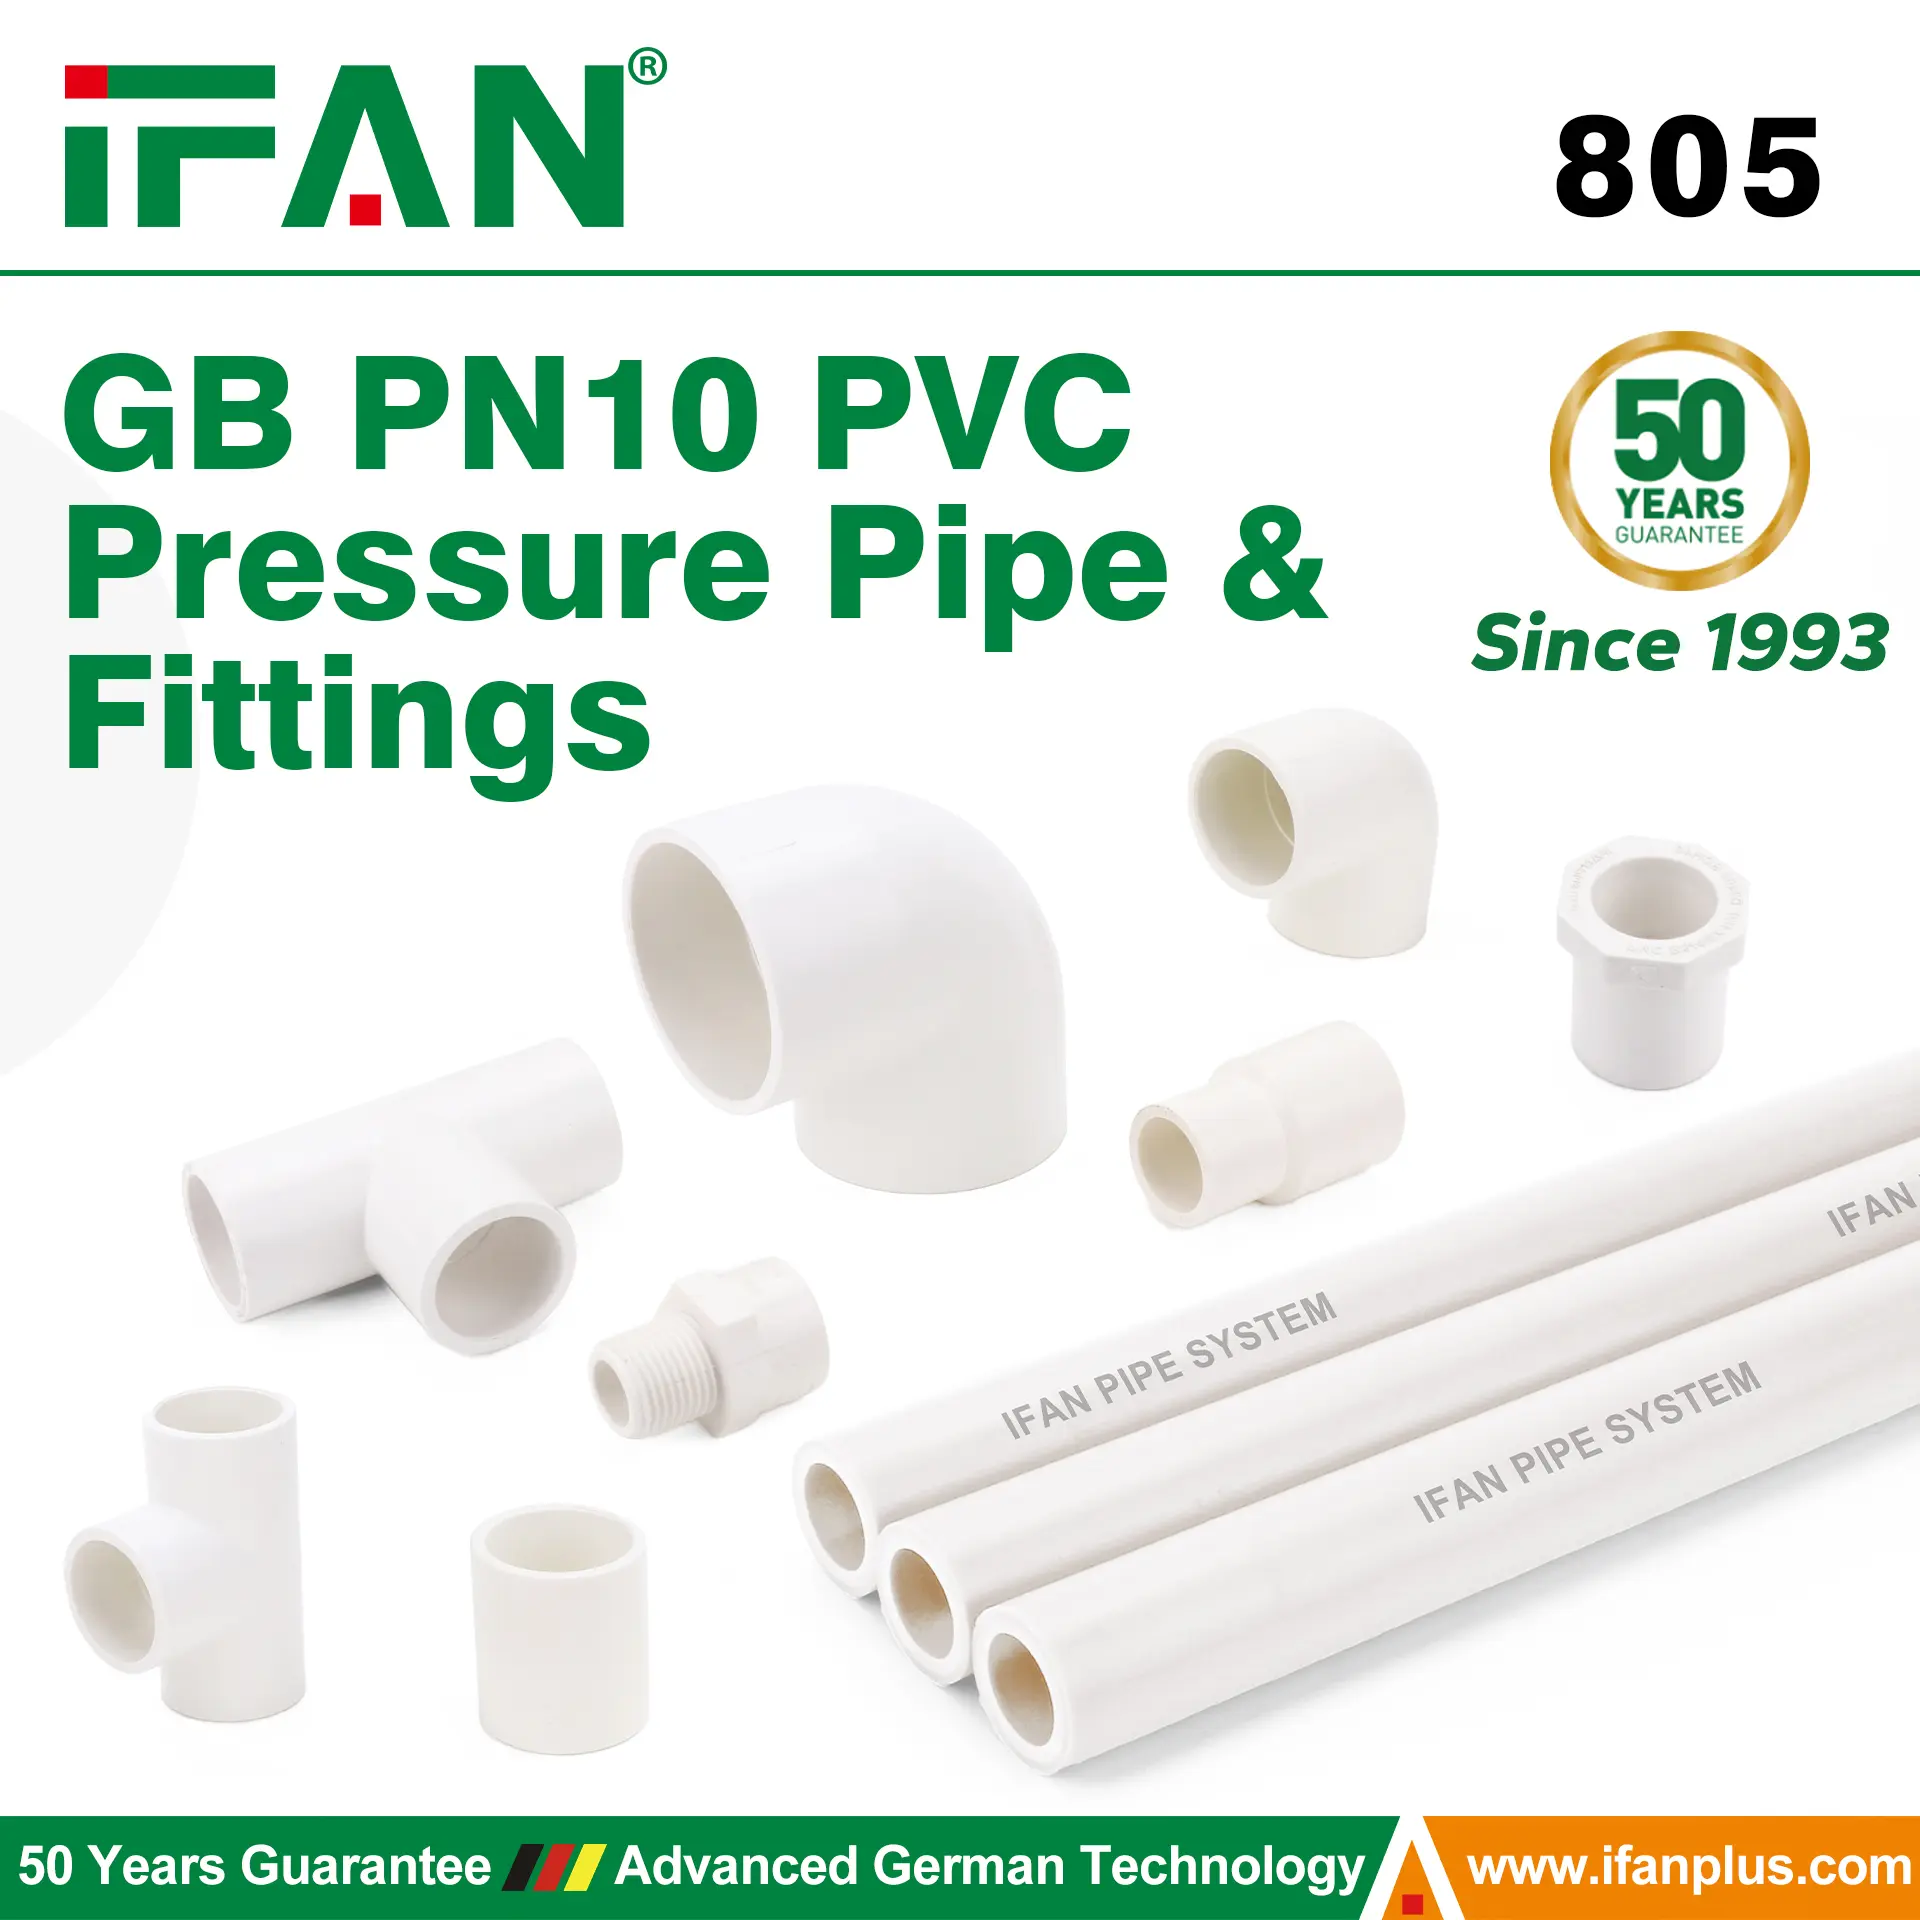 GB PN10 PVC Pressure Pipe And Fittings